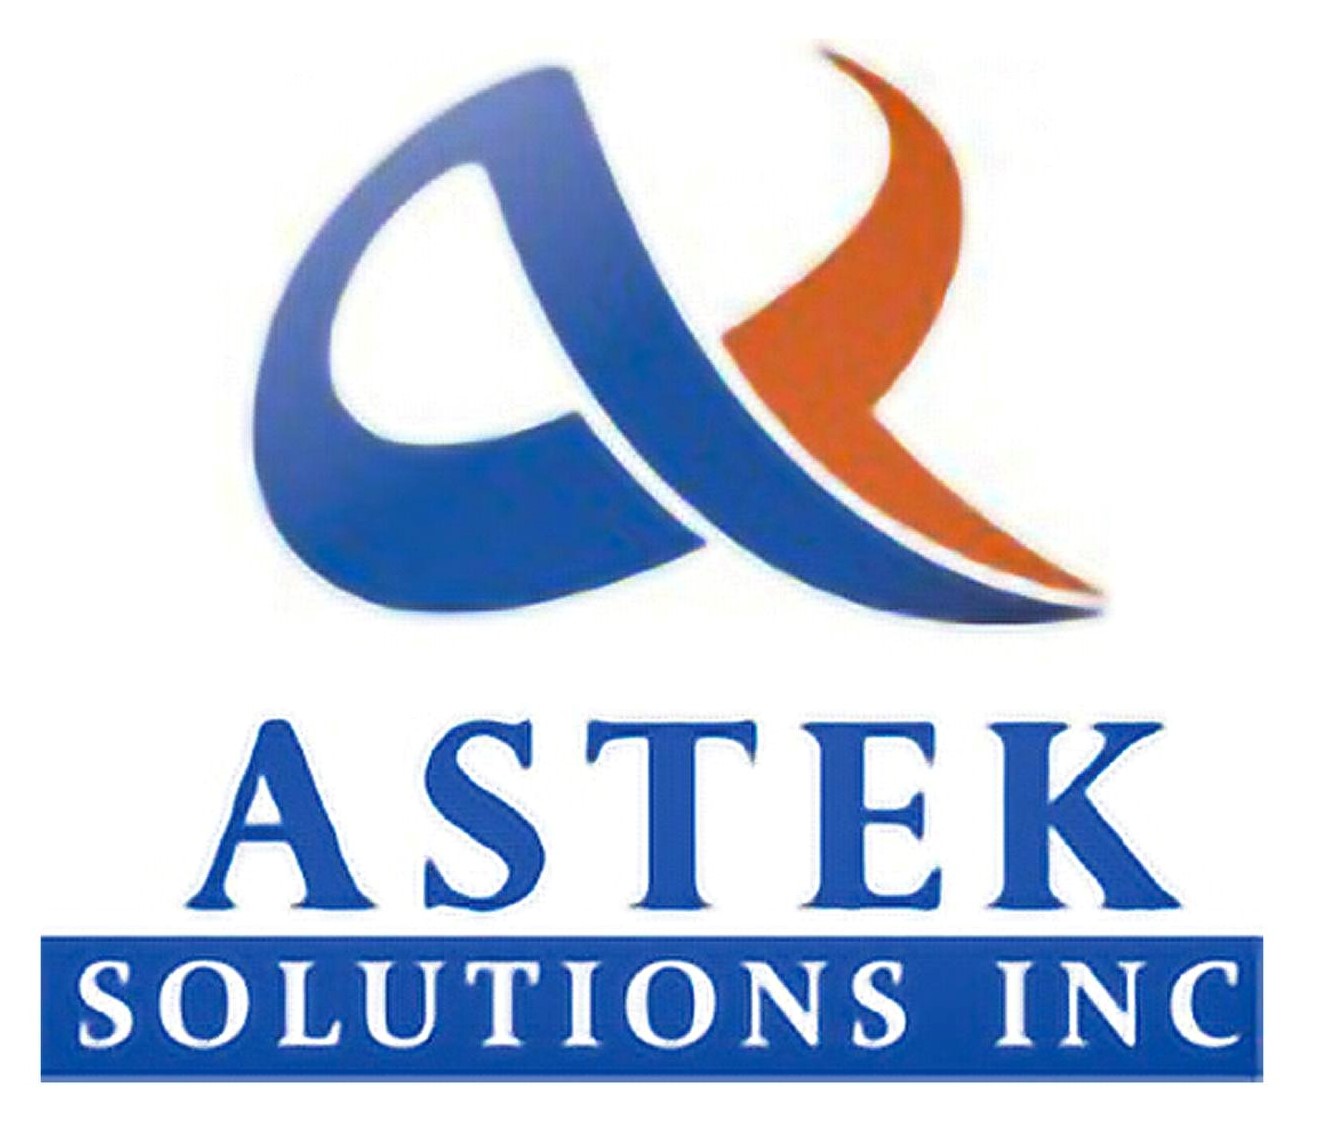 Astek Solutions Inc